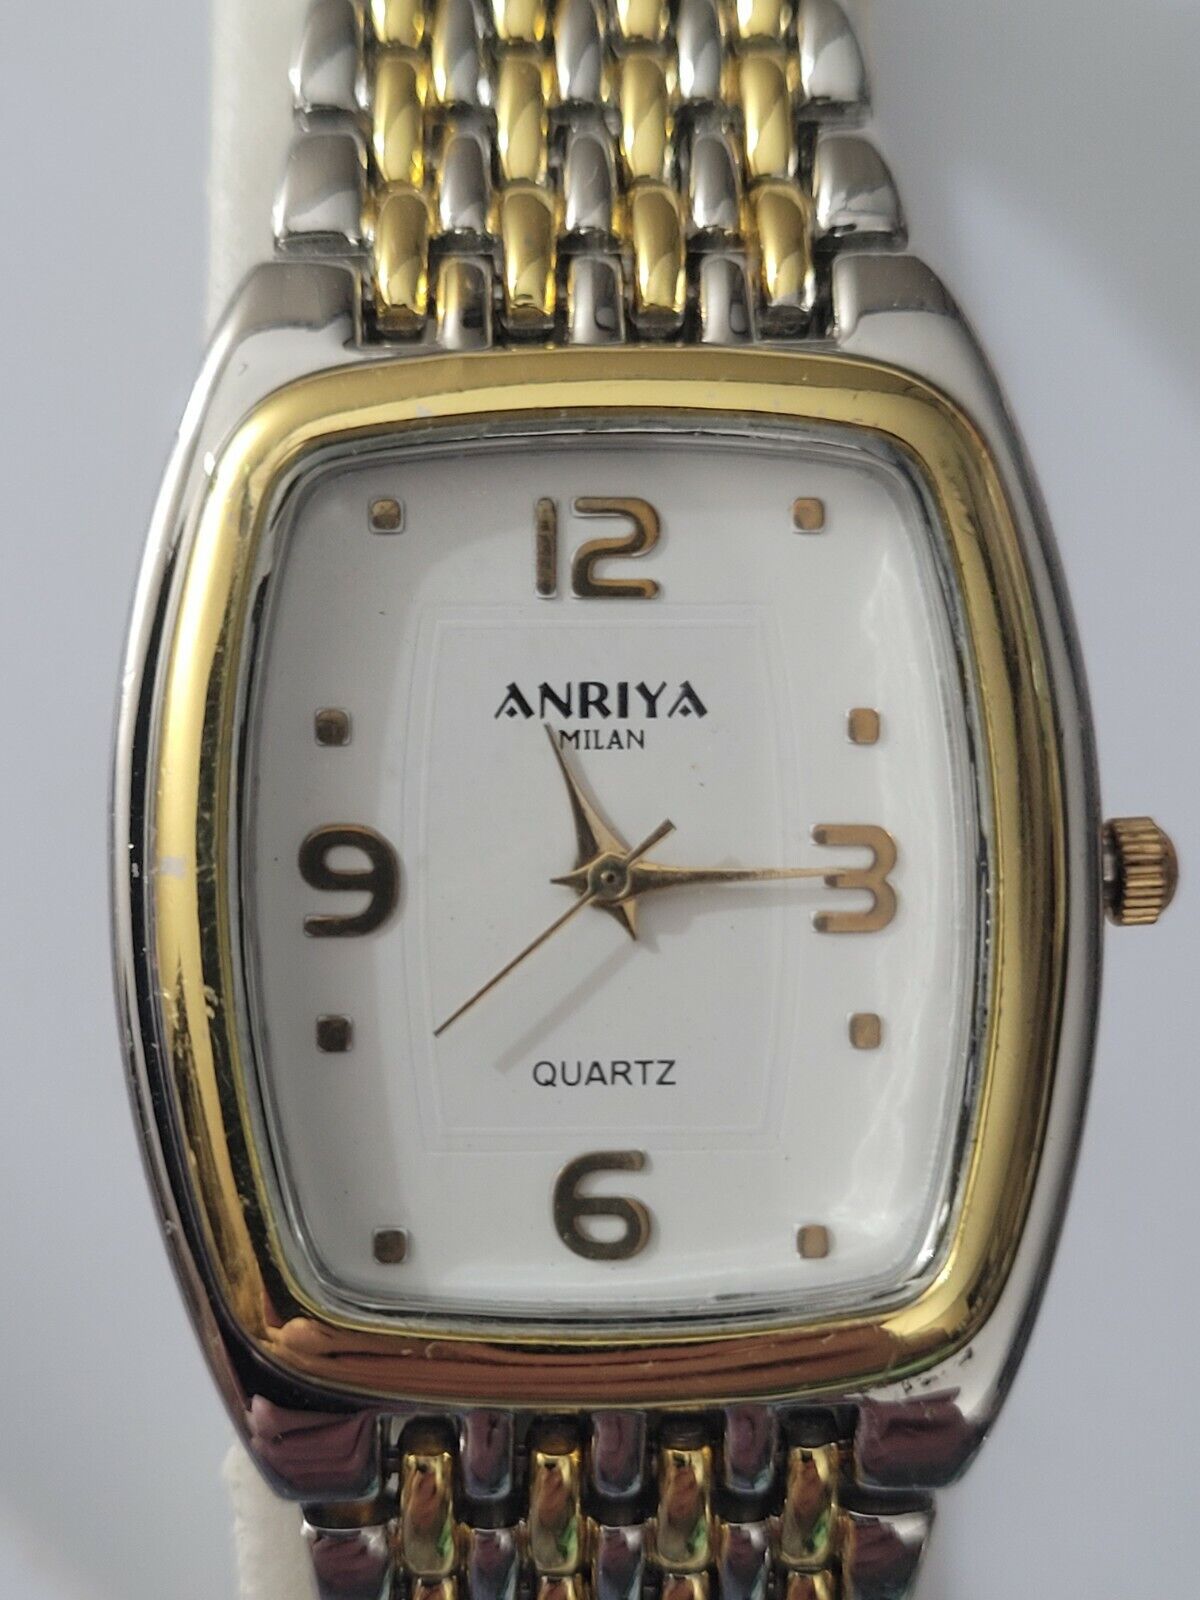 Anriya Milan Quartz Watch. Needs Battery. Sold As Is